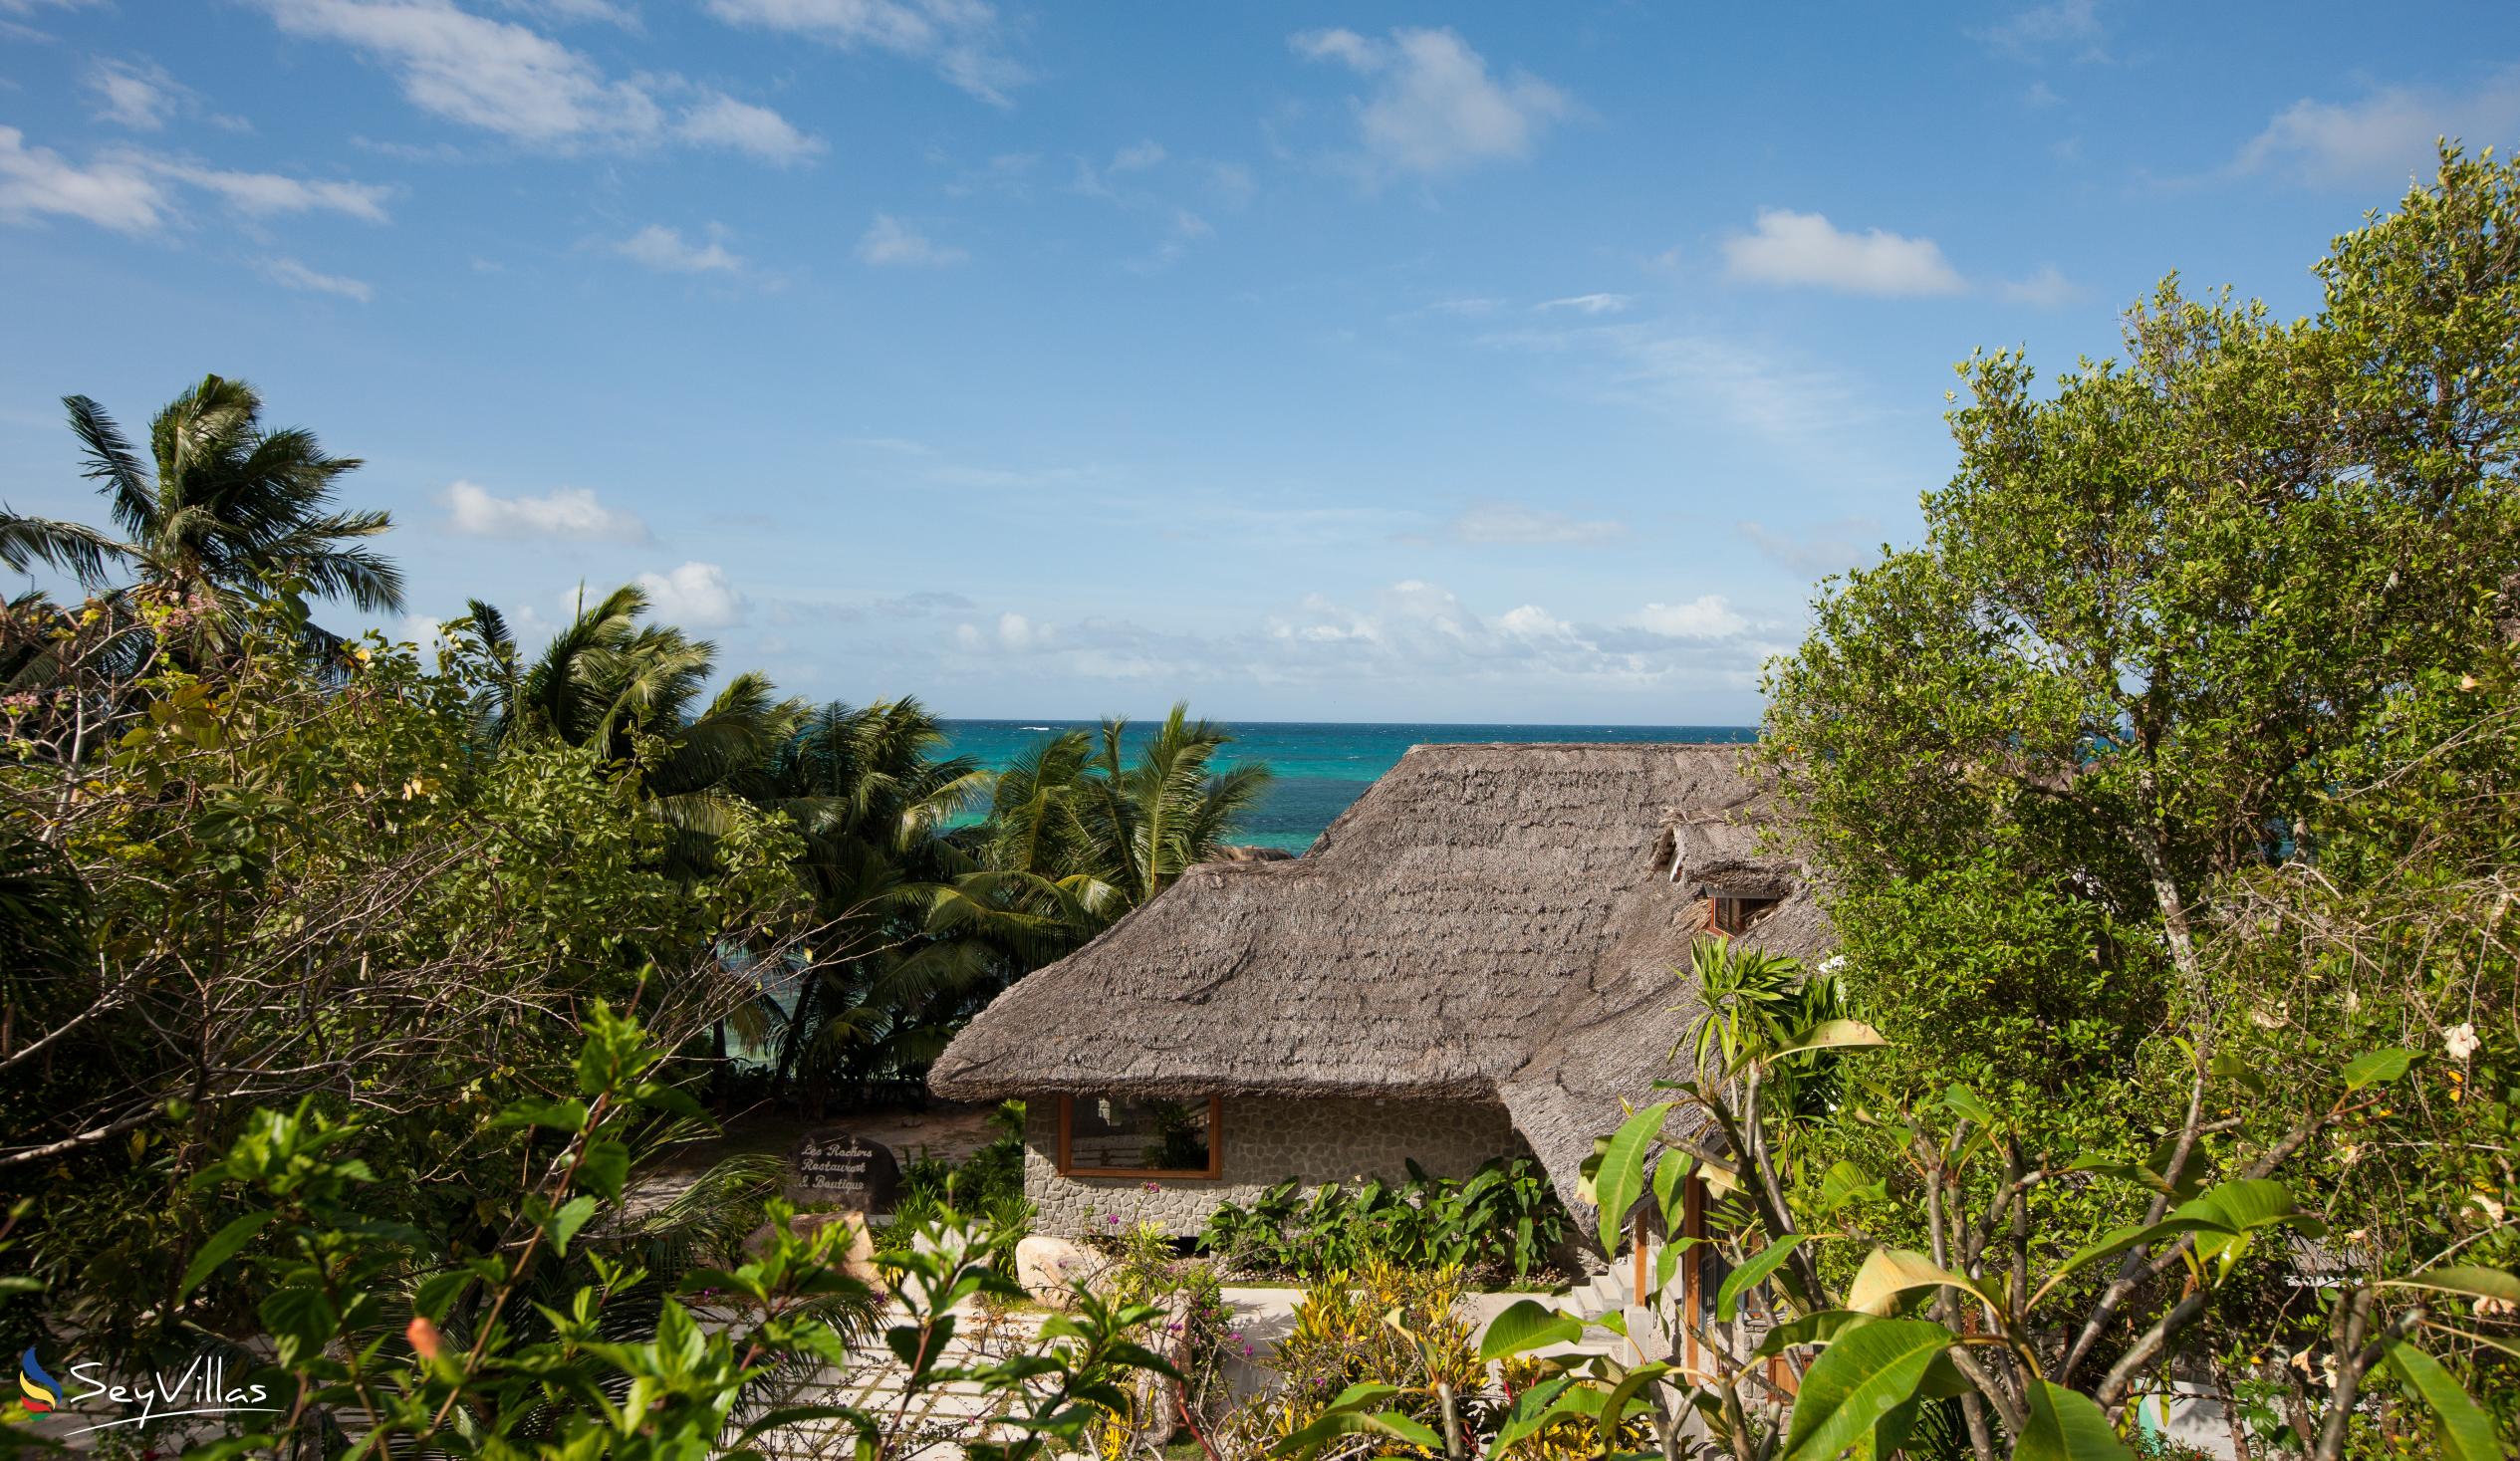 Foto 29: YASAD Luxury Beach Residence - Posizione - Praslin (Seychelles)